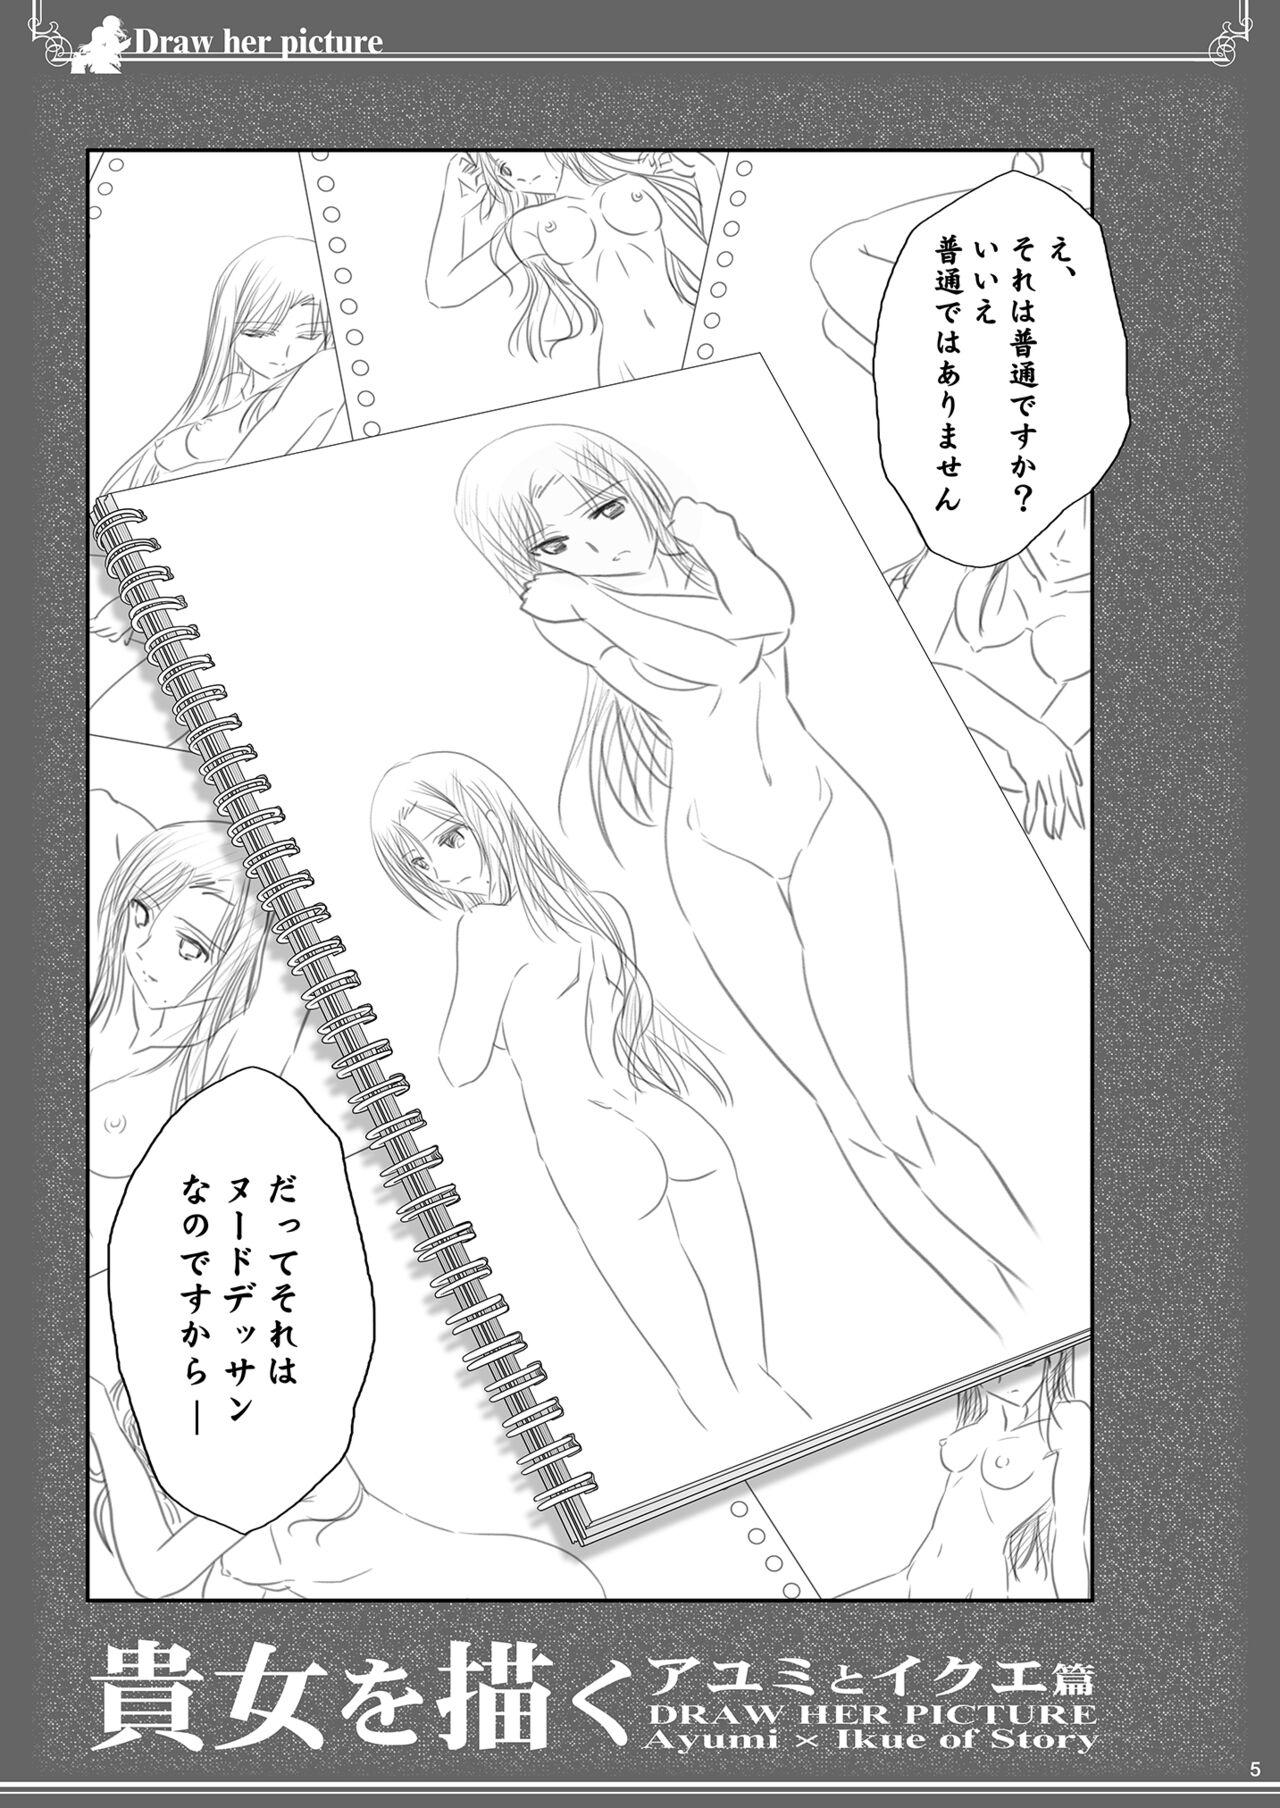 Lesbians 貴女を描く アユミとイクエのエスケッチ - Original Big Dicks - Page 5